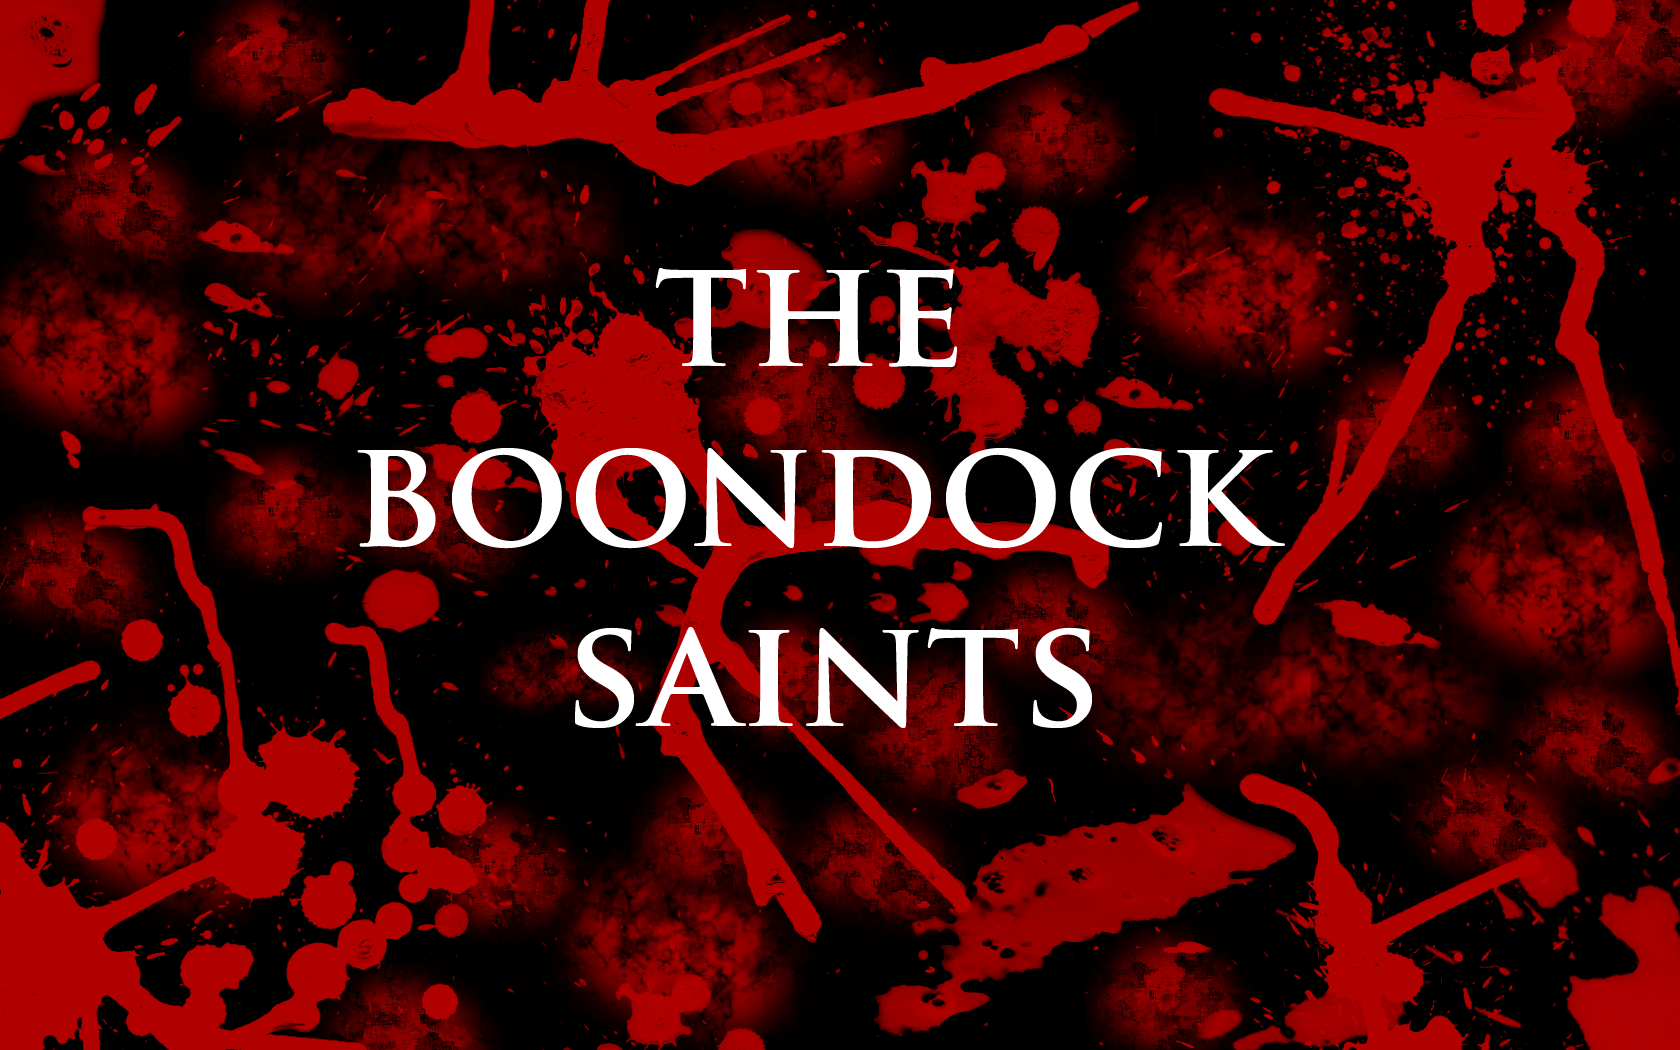 Boondock Saints Bloody Wallpaper - The Boondock Saints Wallpaper ...